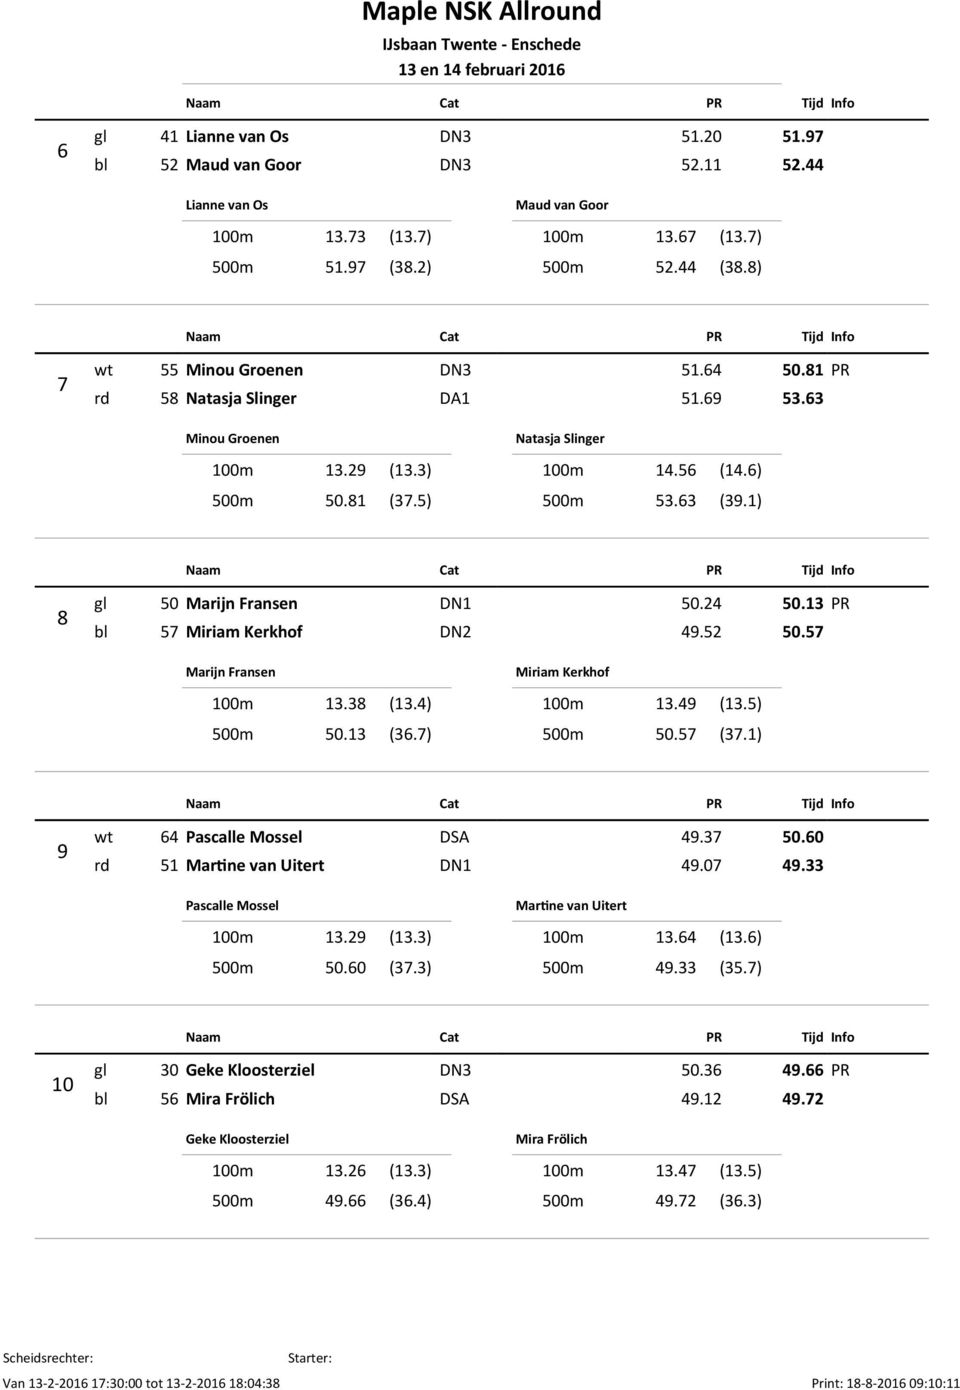 1) 8 gl 50 Marijn Fransen DN1 50.24 50.13 bl 57 Miriam Kerkhof DN2 49.52 50.57 Marijn Fransen 100m 13.38 (13.4) 500m 50.13 (36.7) Miriam Kerkhof 100m 13.49 (13.5) 500m 50.57 (37.